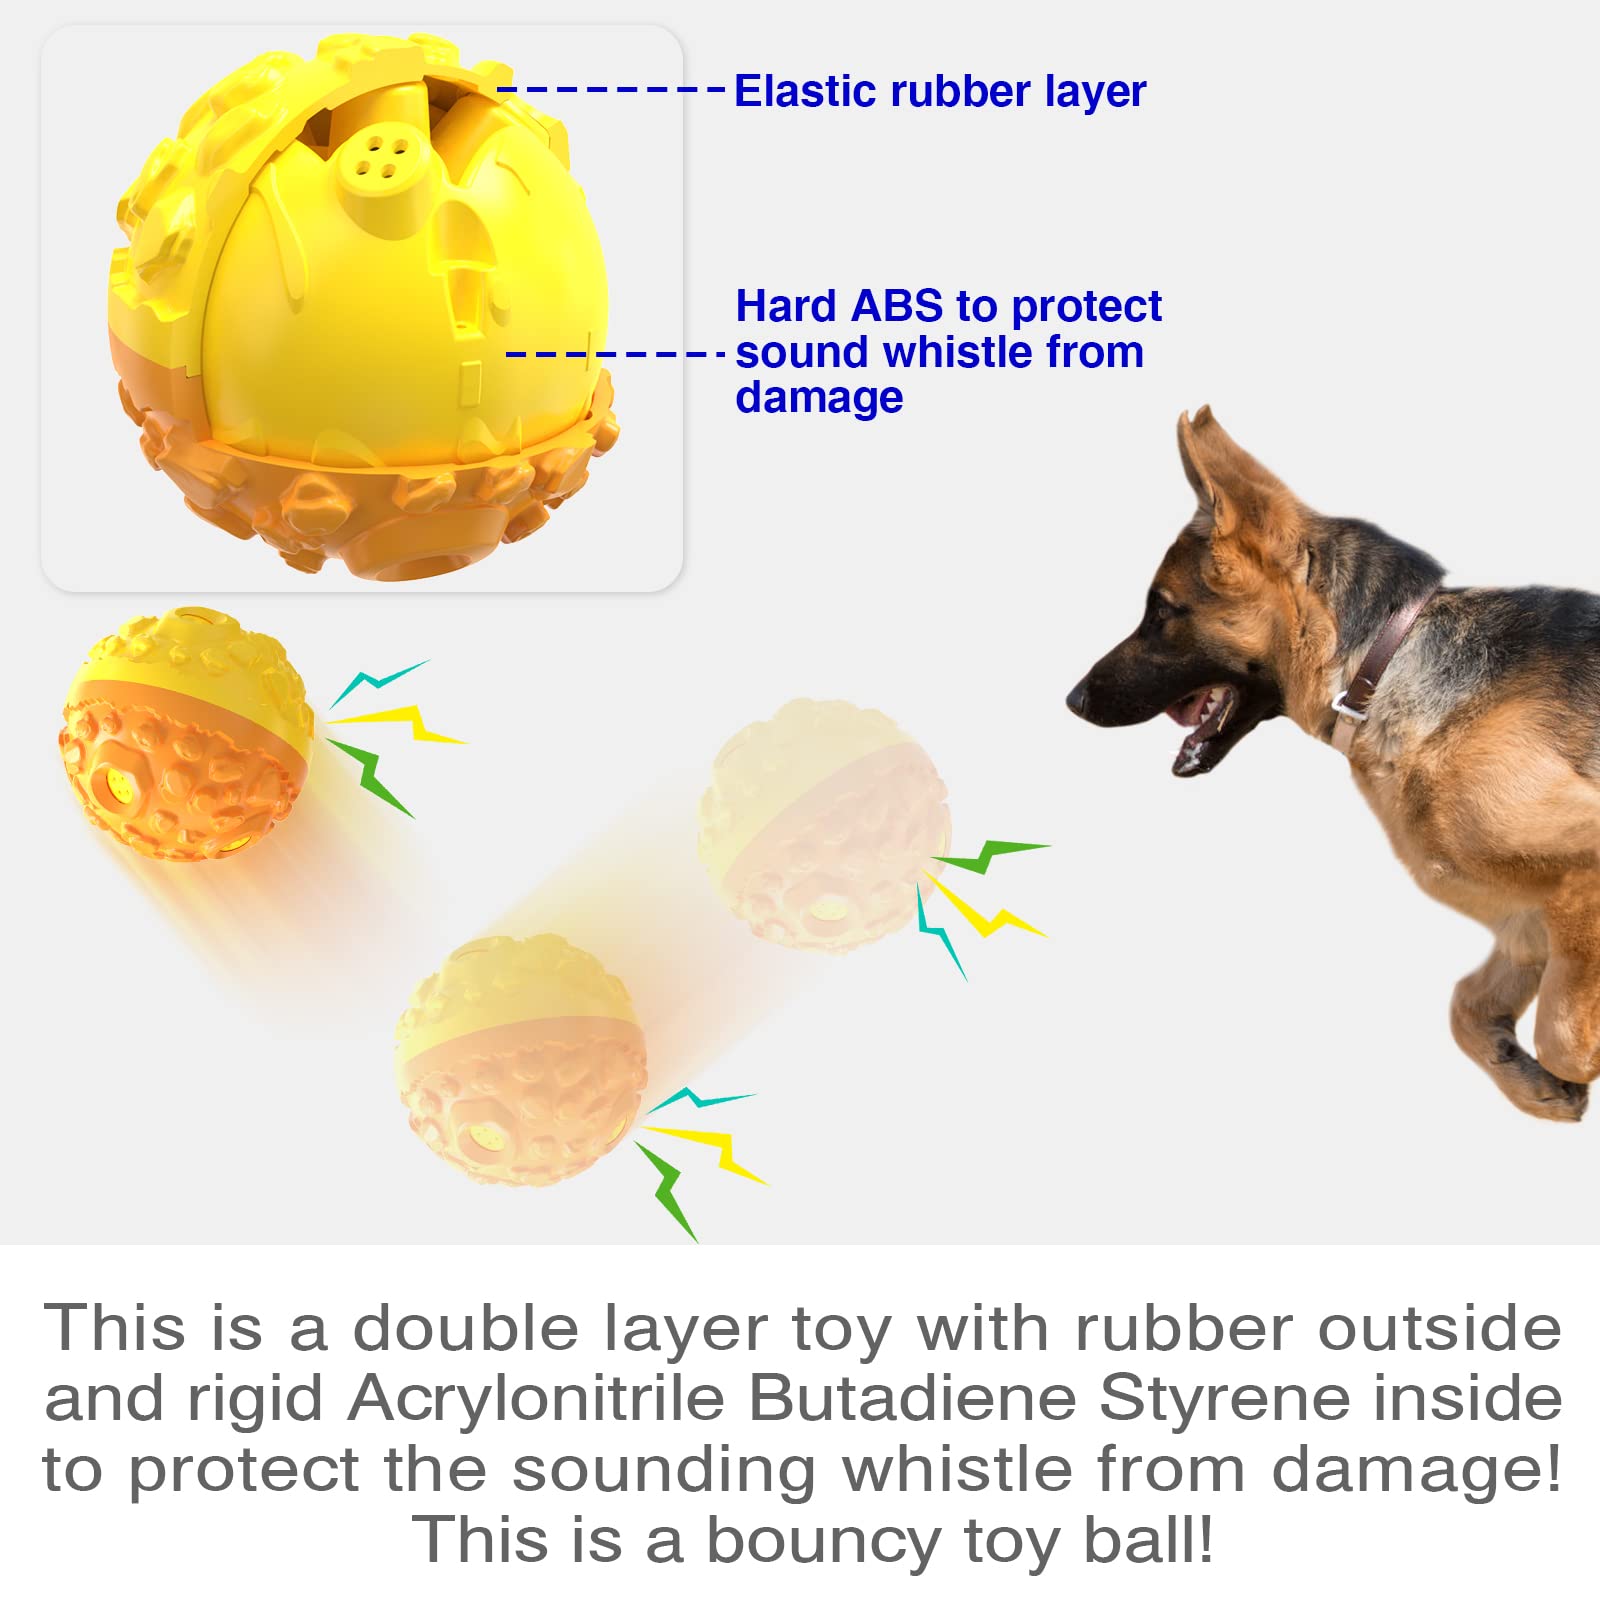 Dog Balls Treat Dispenser Wobble Wag Talking Ball Puppy Toys